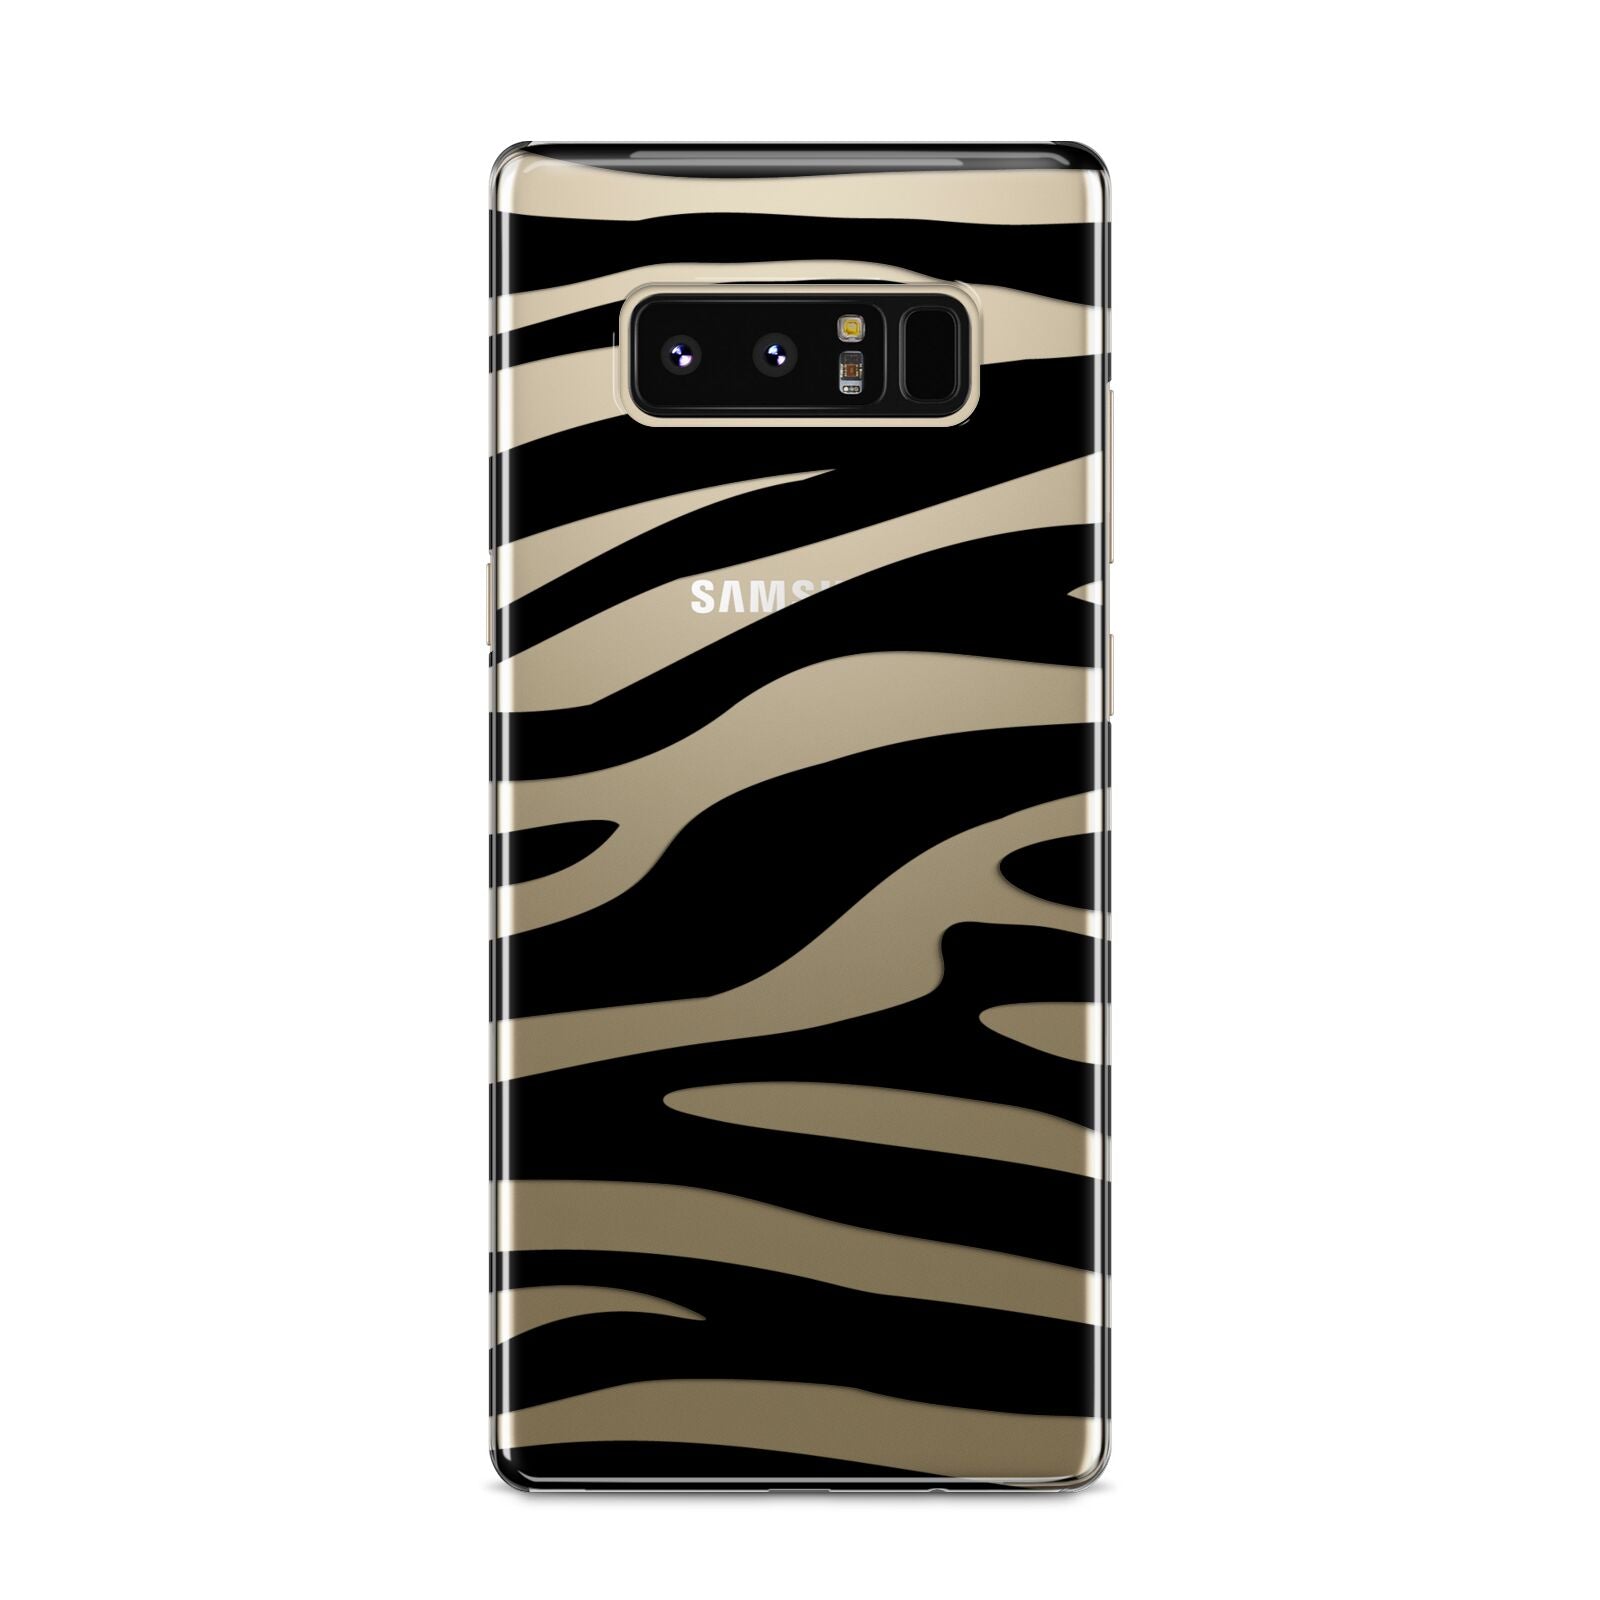 Zebra Print Samsung Galaxy S8 Case